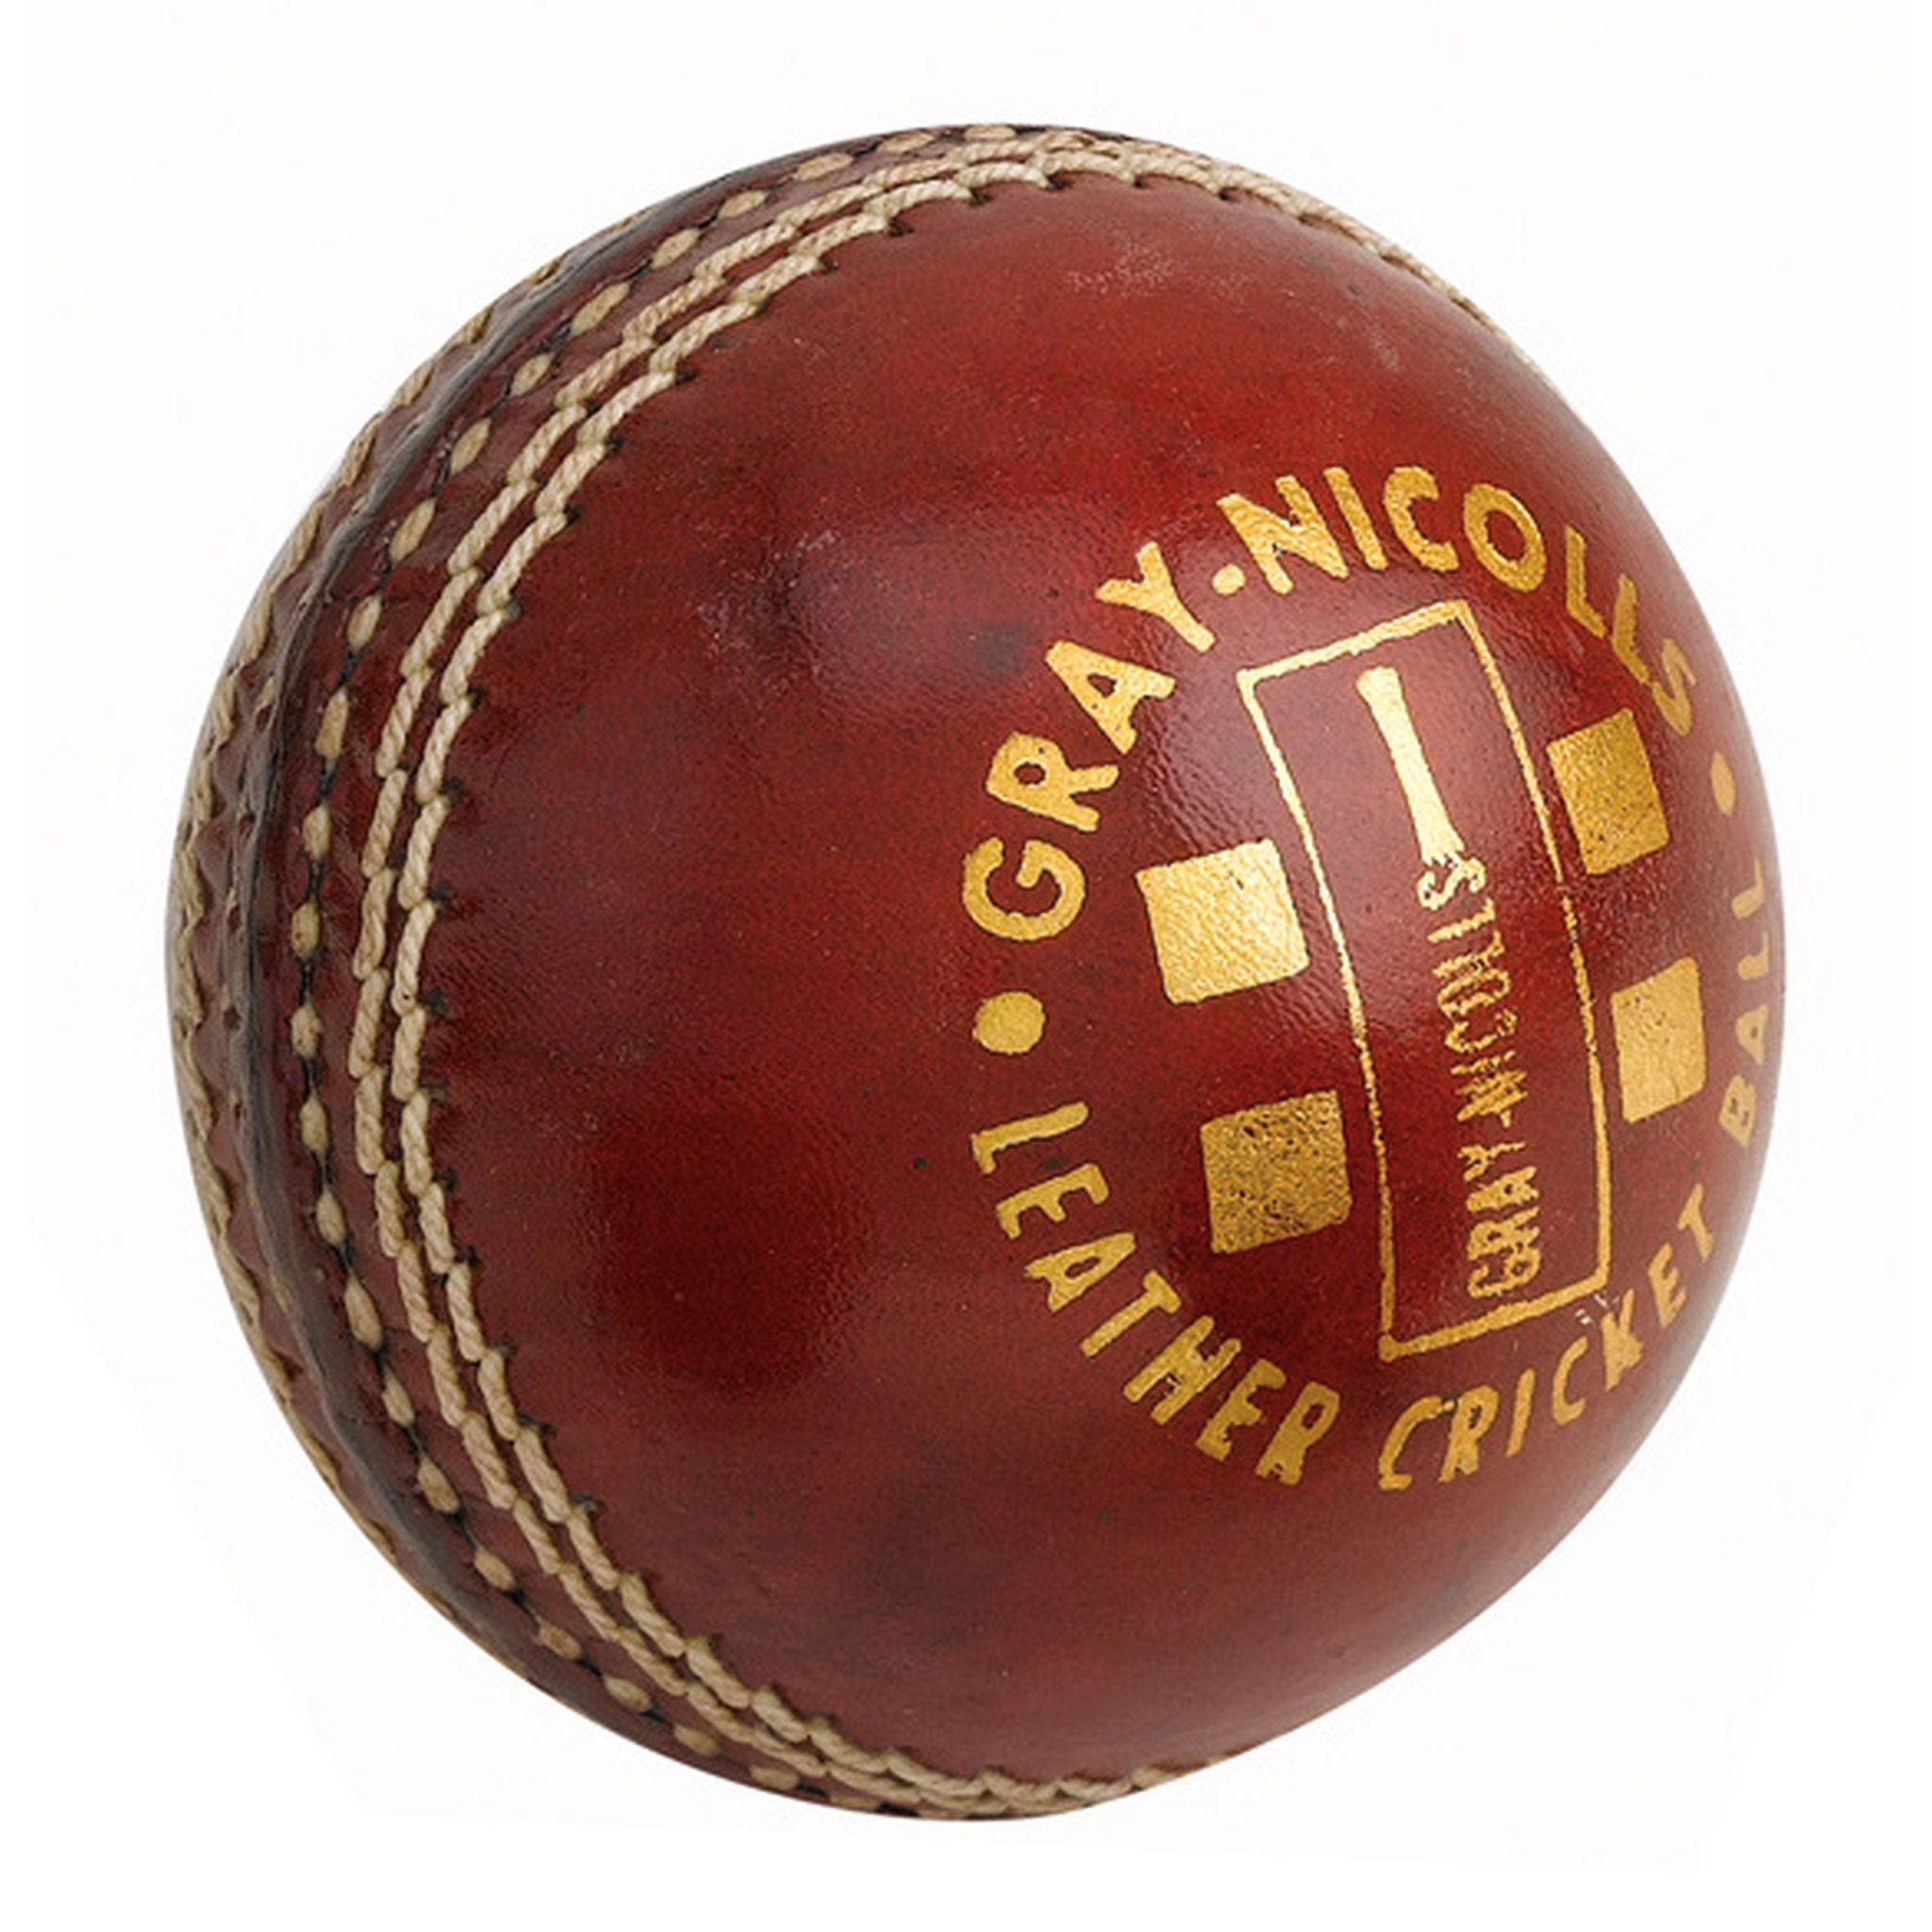 Gray-Nicolls Club 142g 2 piece Cricket Ball